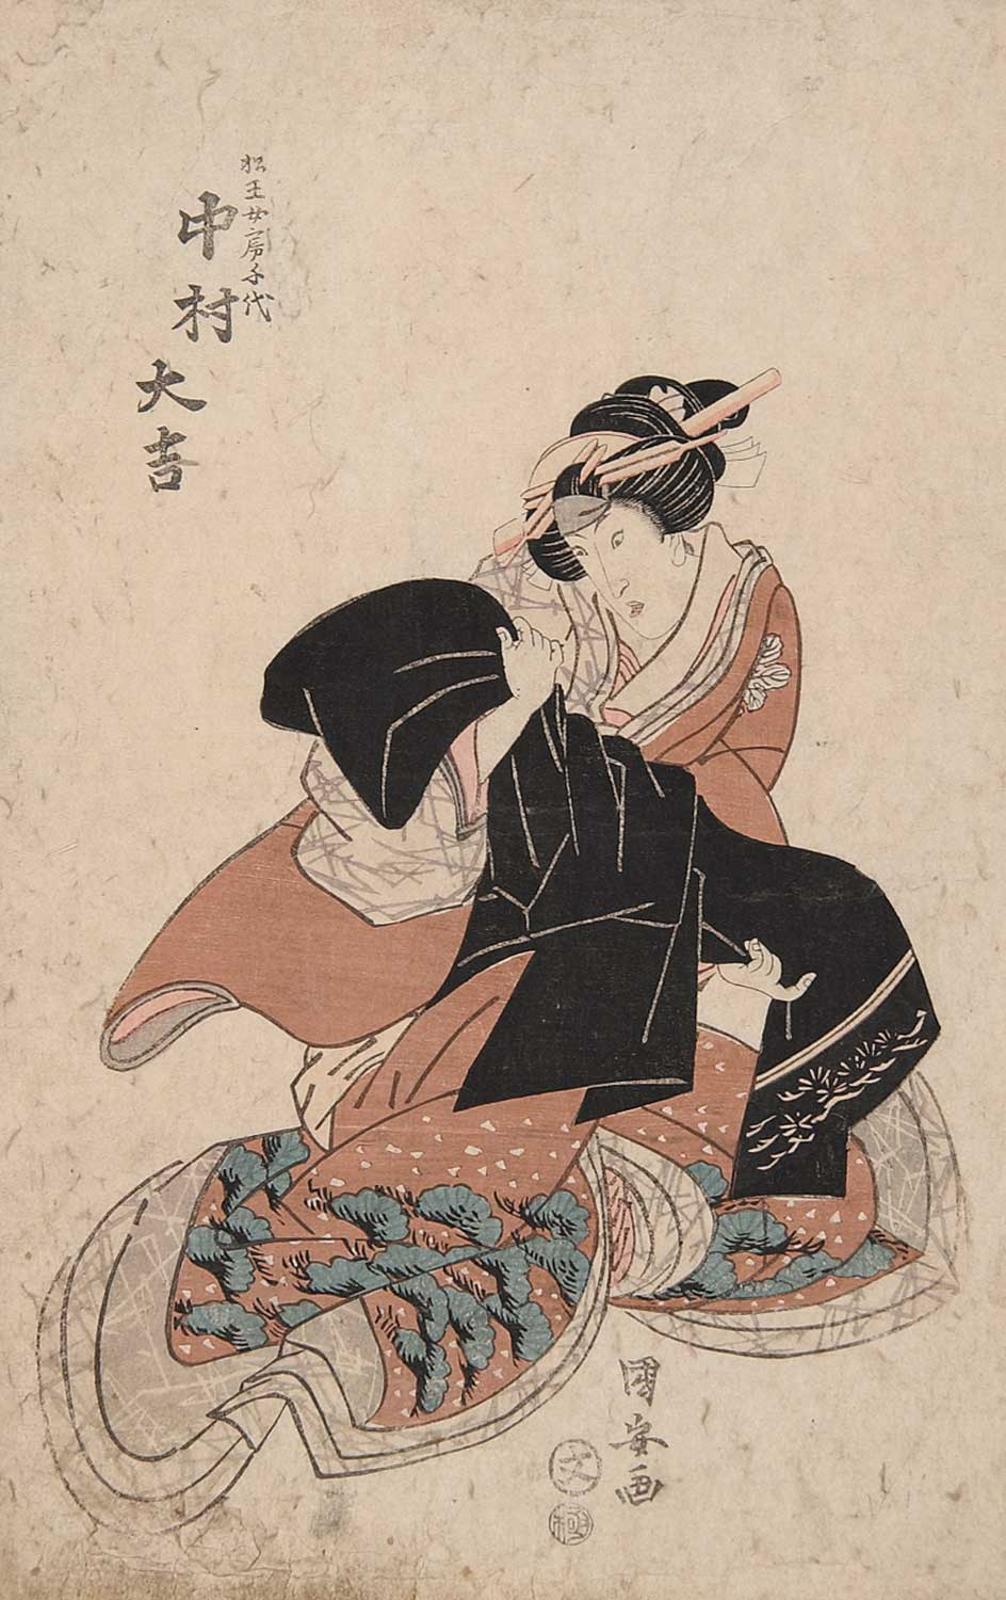 Utagawa Kuniyoshi (1979-1861) - Untitled - Woman with Kimono